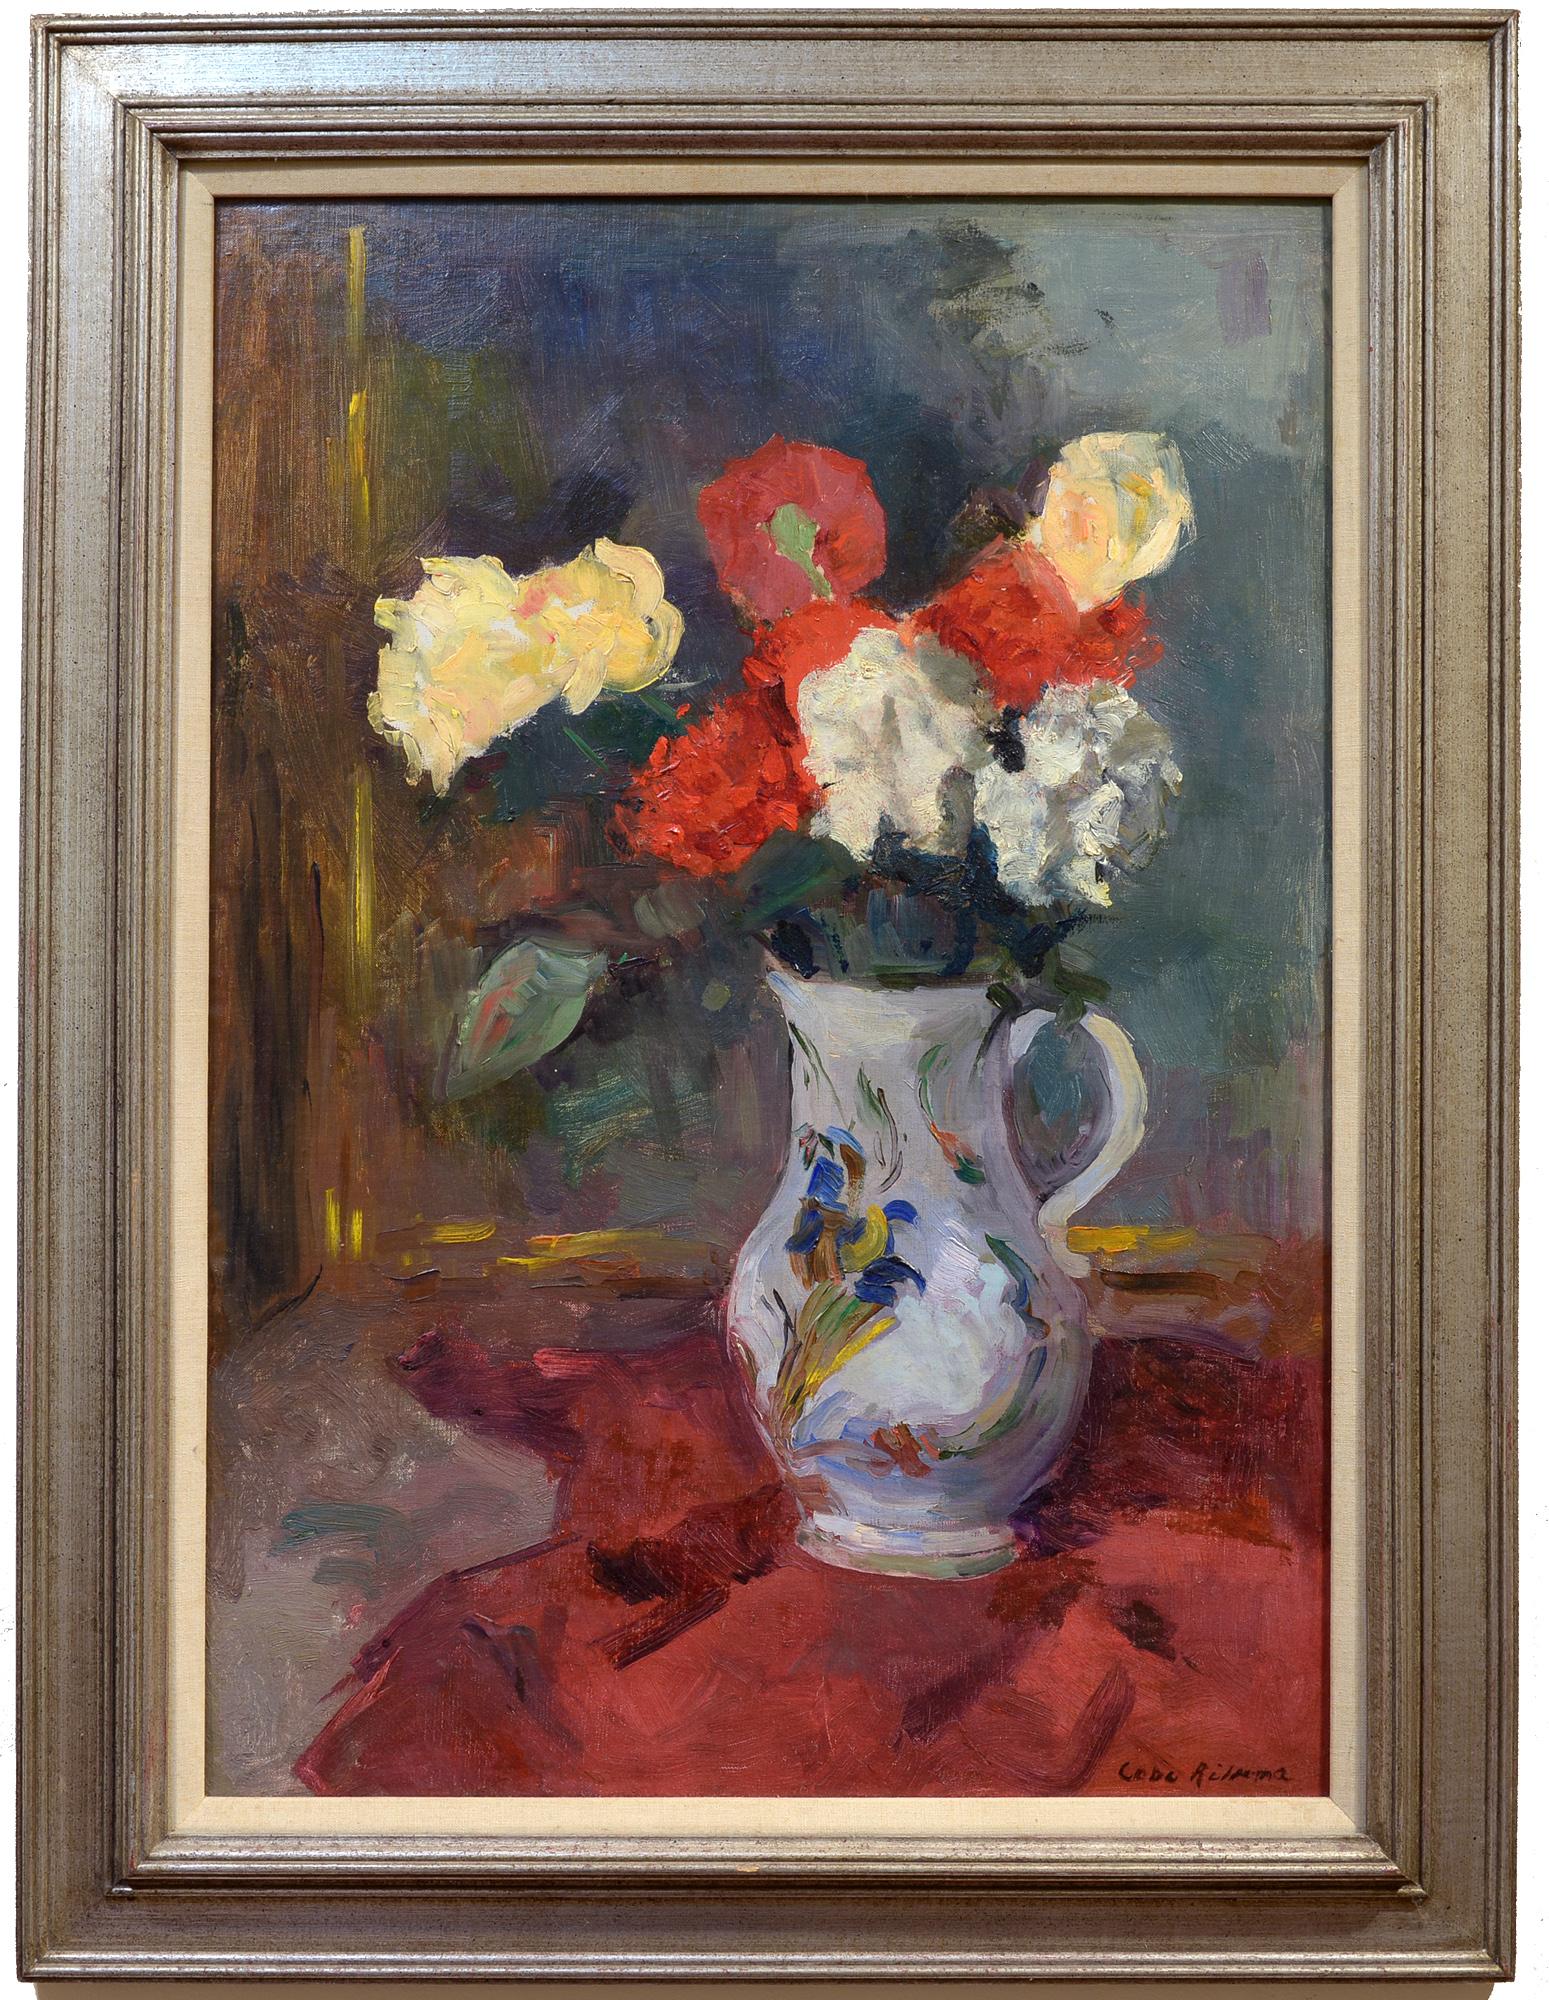 Vaas met Bloemen, Flower Still Life, Dutch, Impressionist - Painting by Coba Ritsema